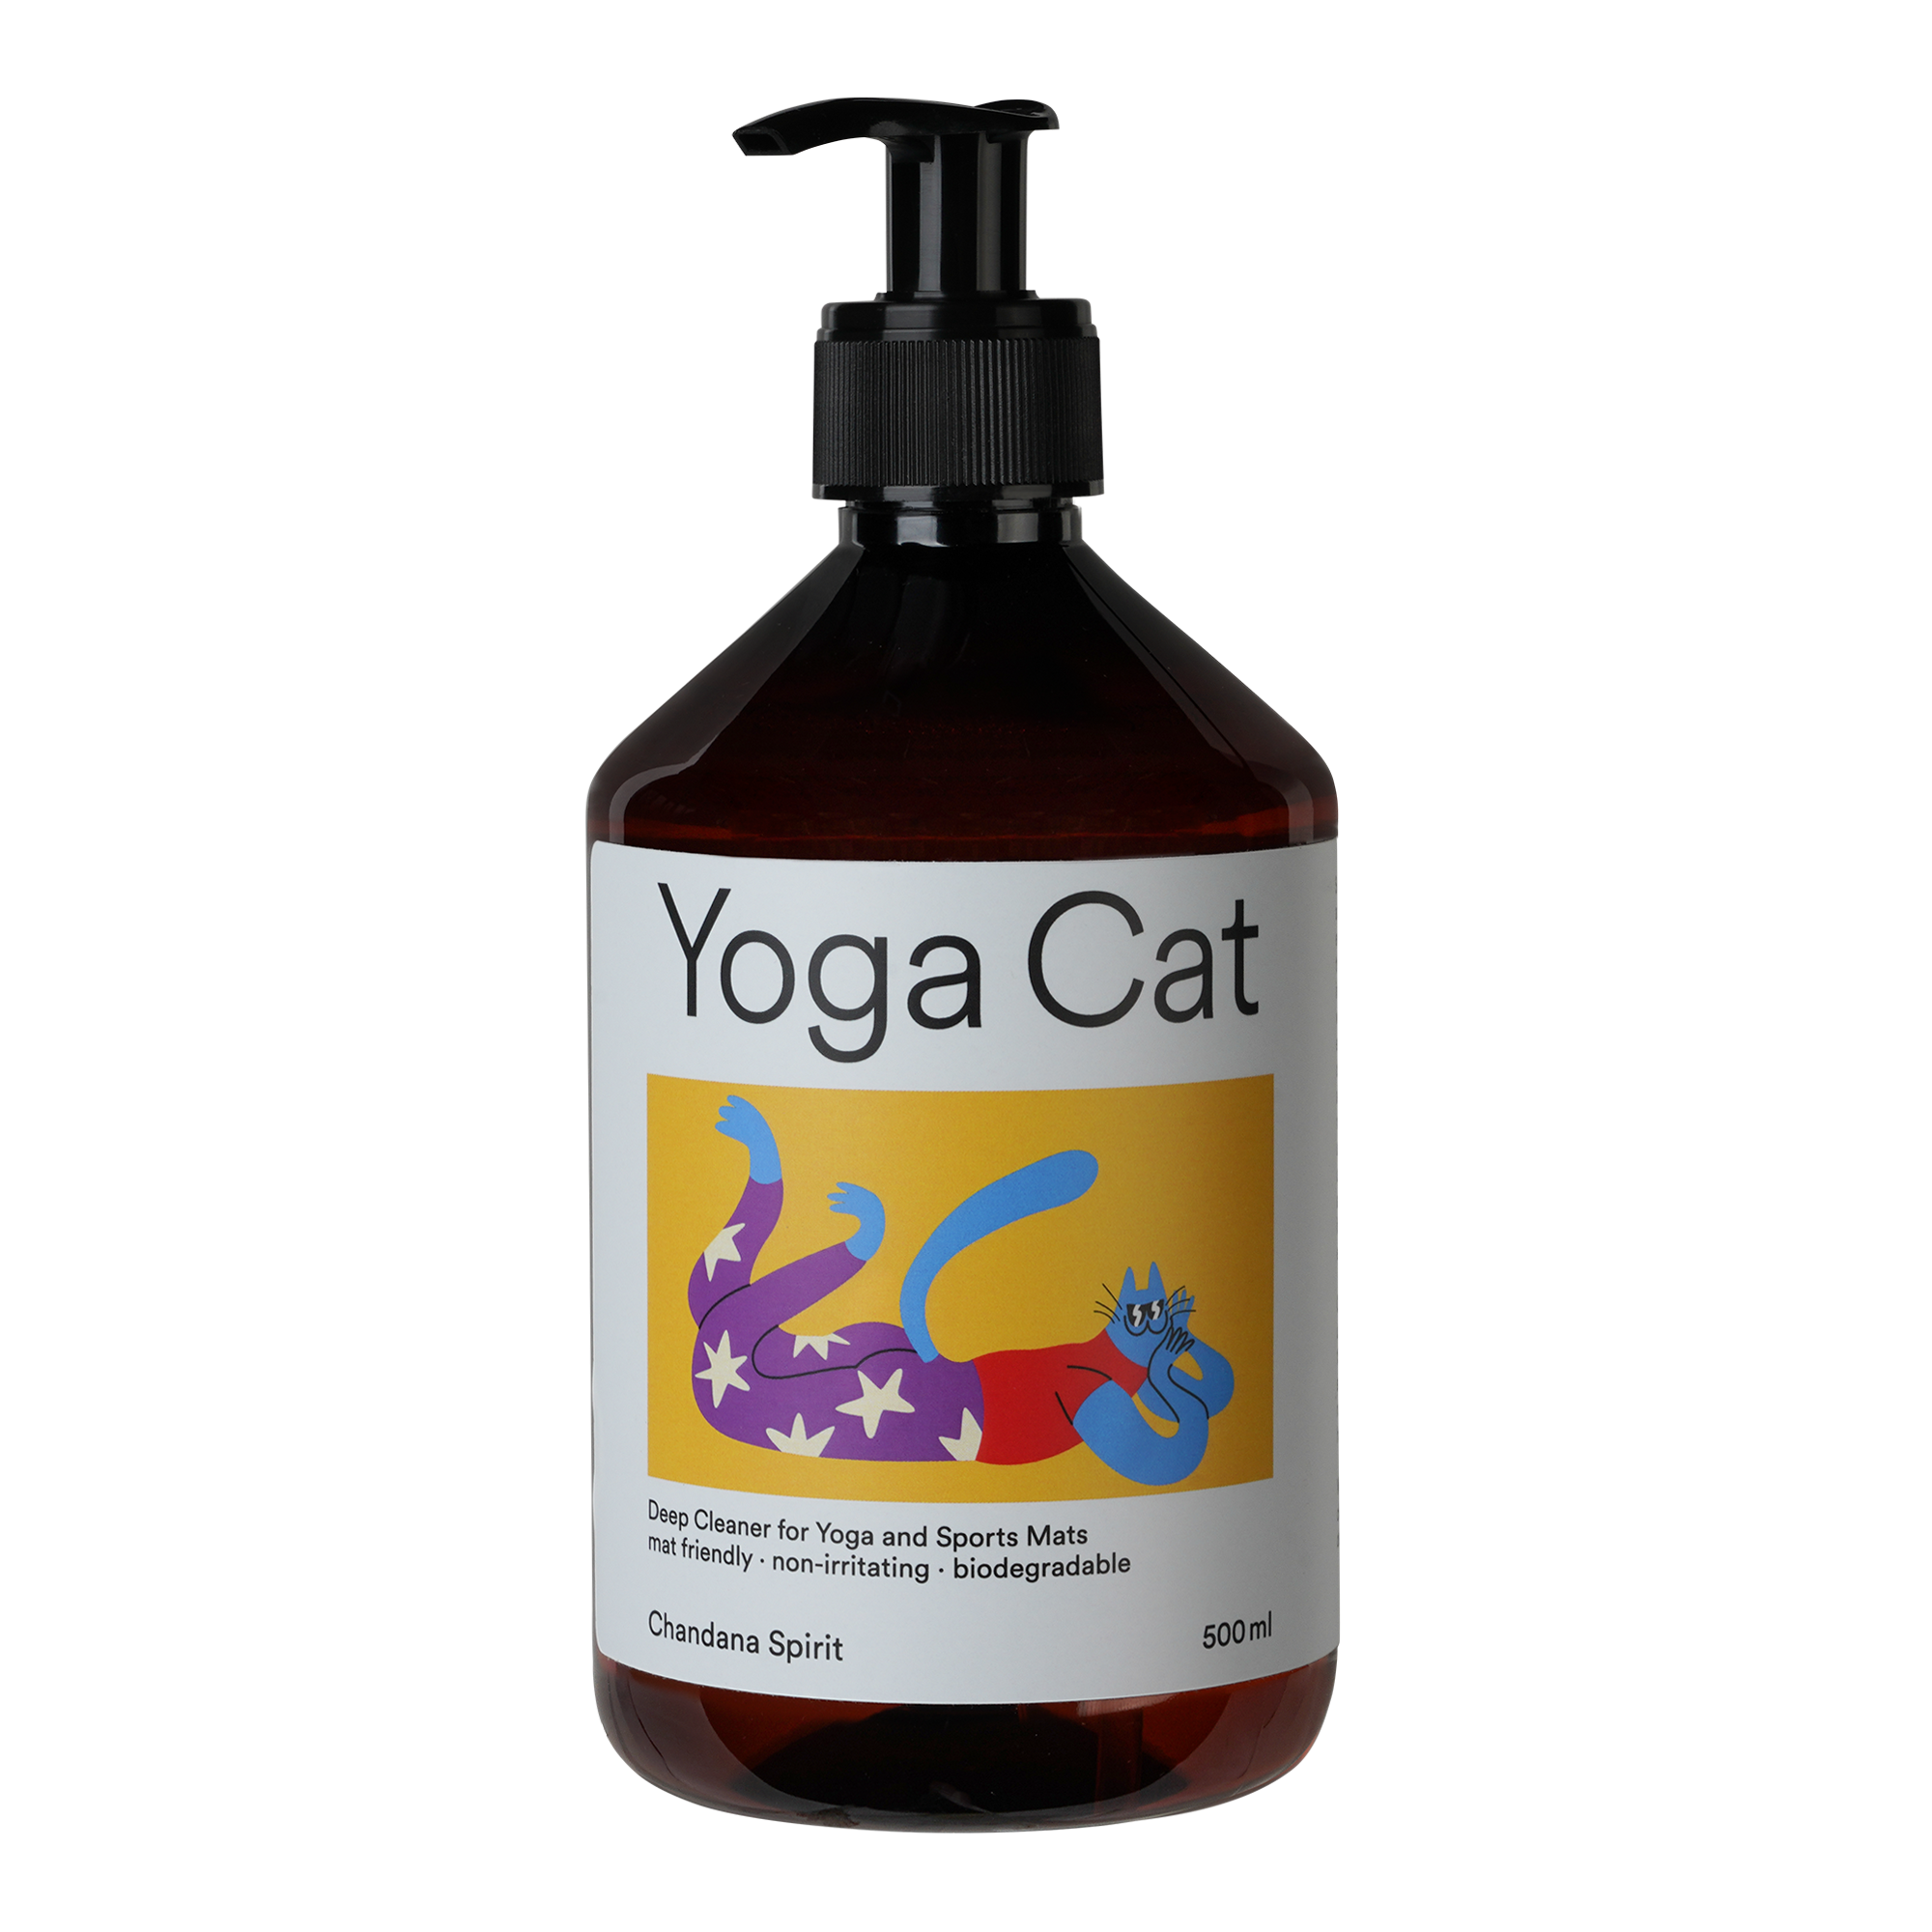 disinfectant spray, chandana spirit, yoga cat, cleaning spray, antibacterial spray, yoga studio supplies, aromatherapy spray, environmentally friendly, non-toxic disinfectant